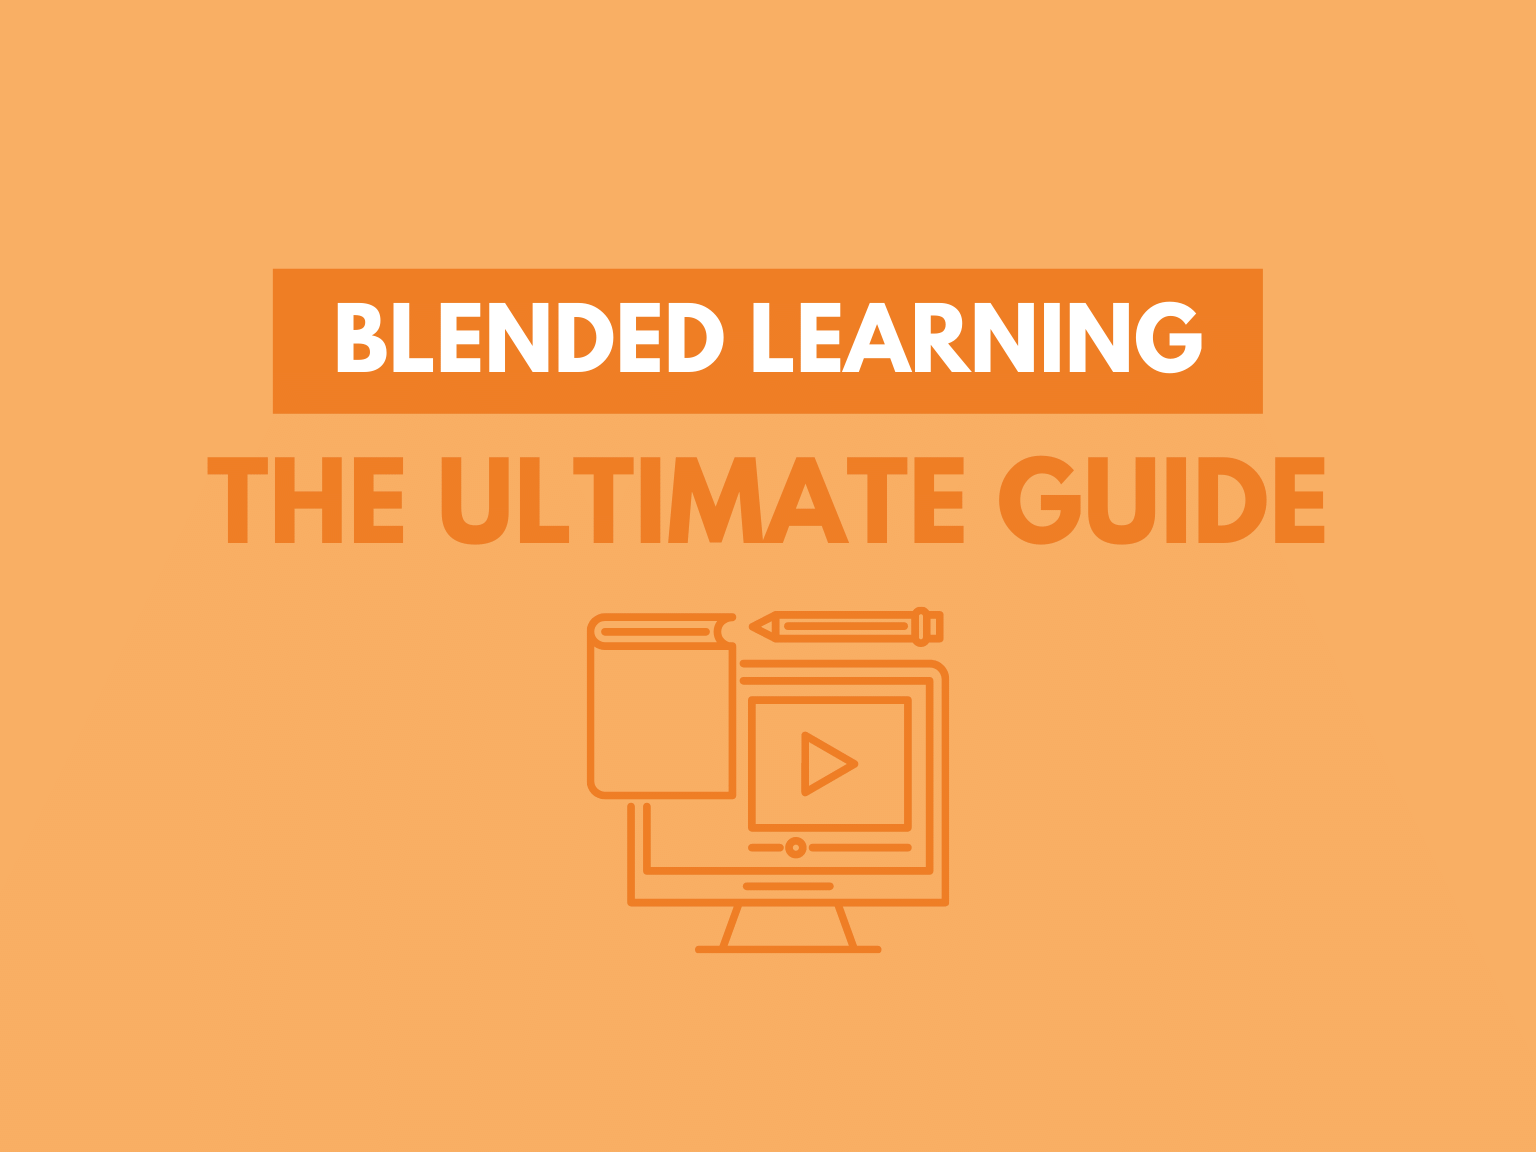 Blended Learning The Ultimate Guide 2020 Header